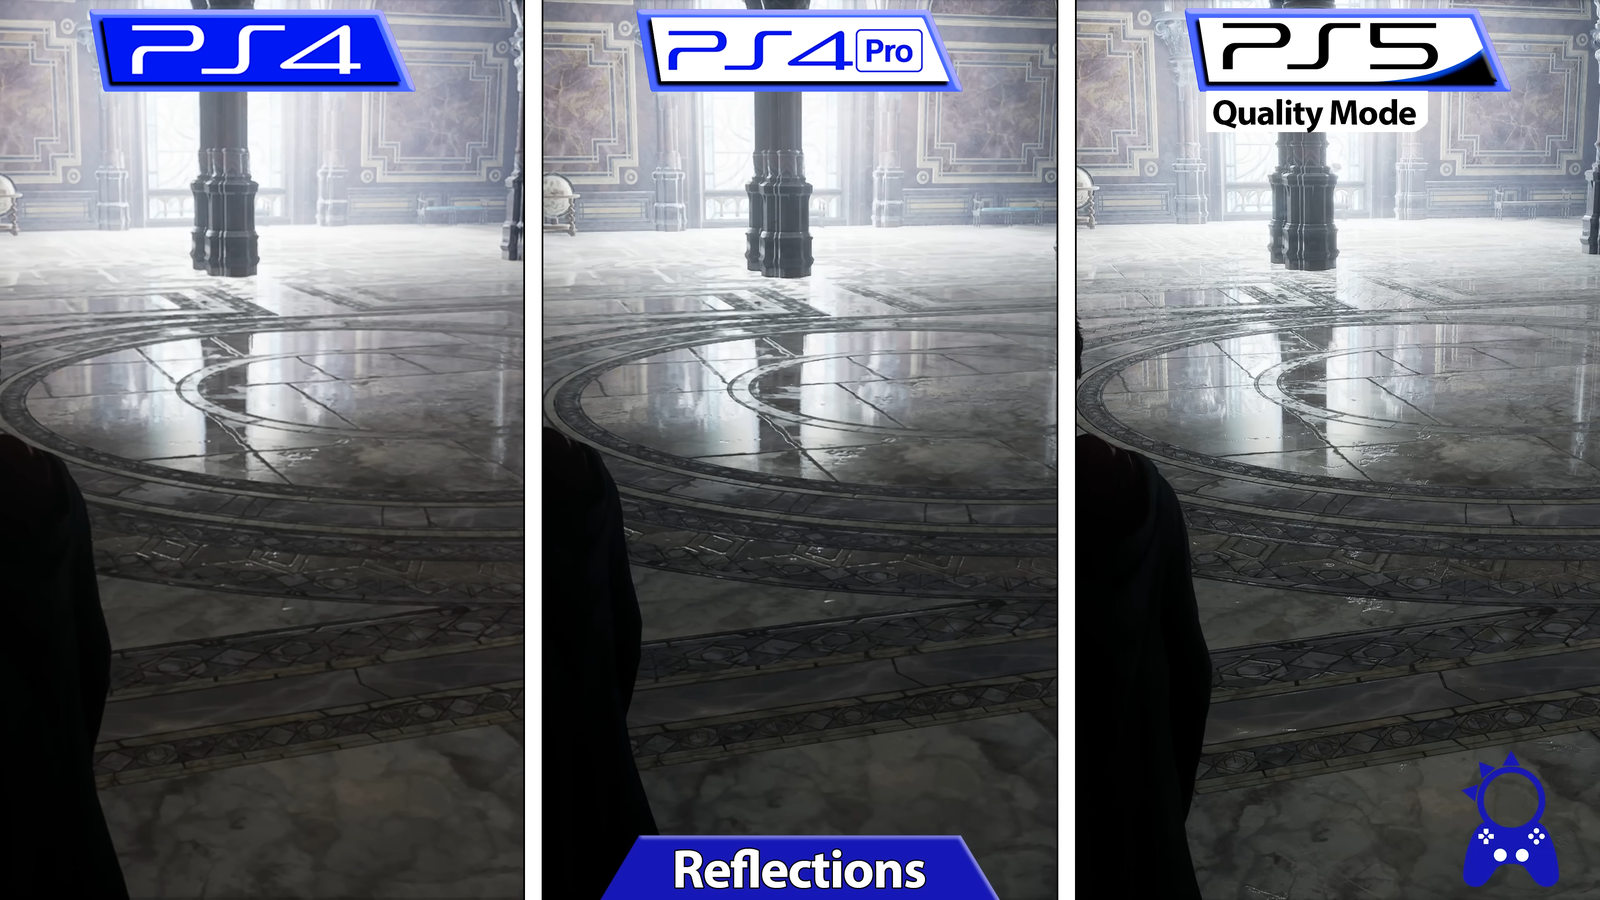 PS4 Pro Surpreende e Rivaliza com PS5 em Performance de Jogos